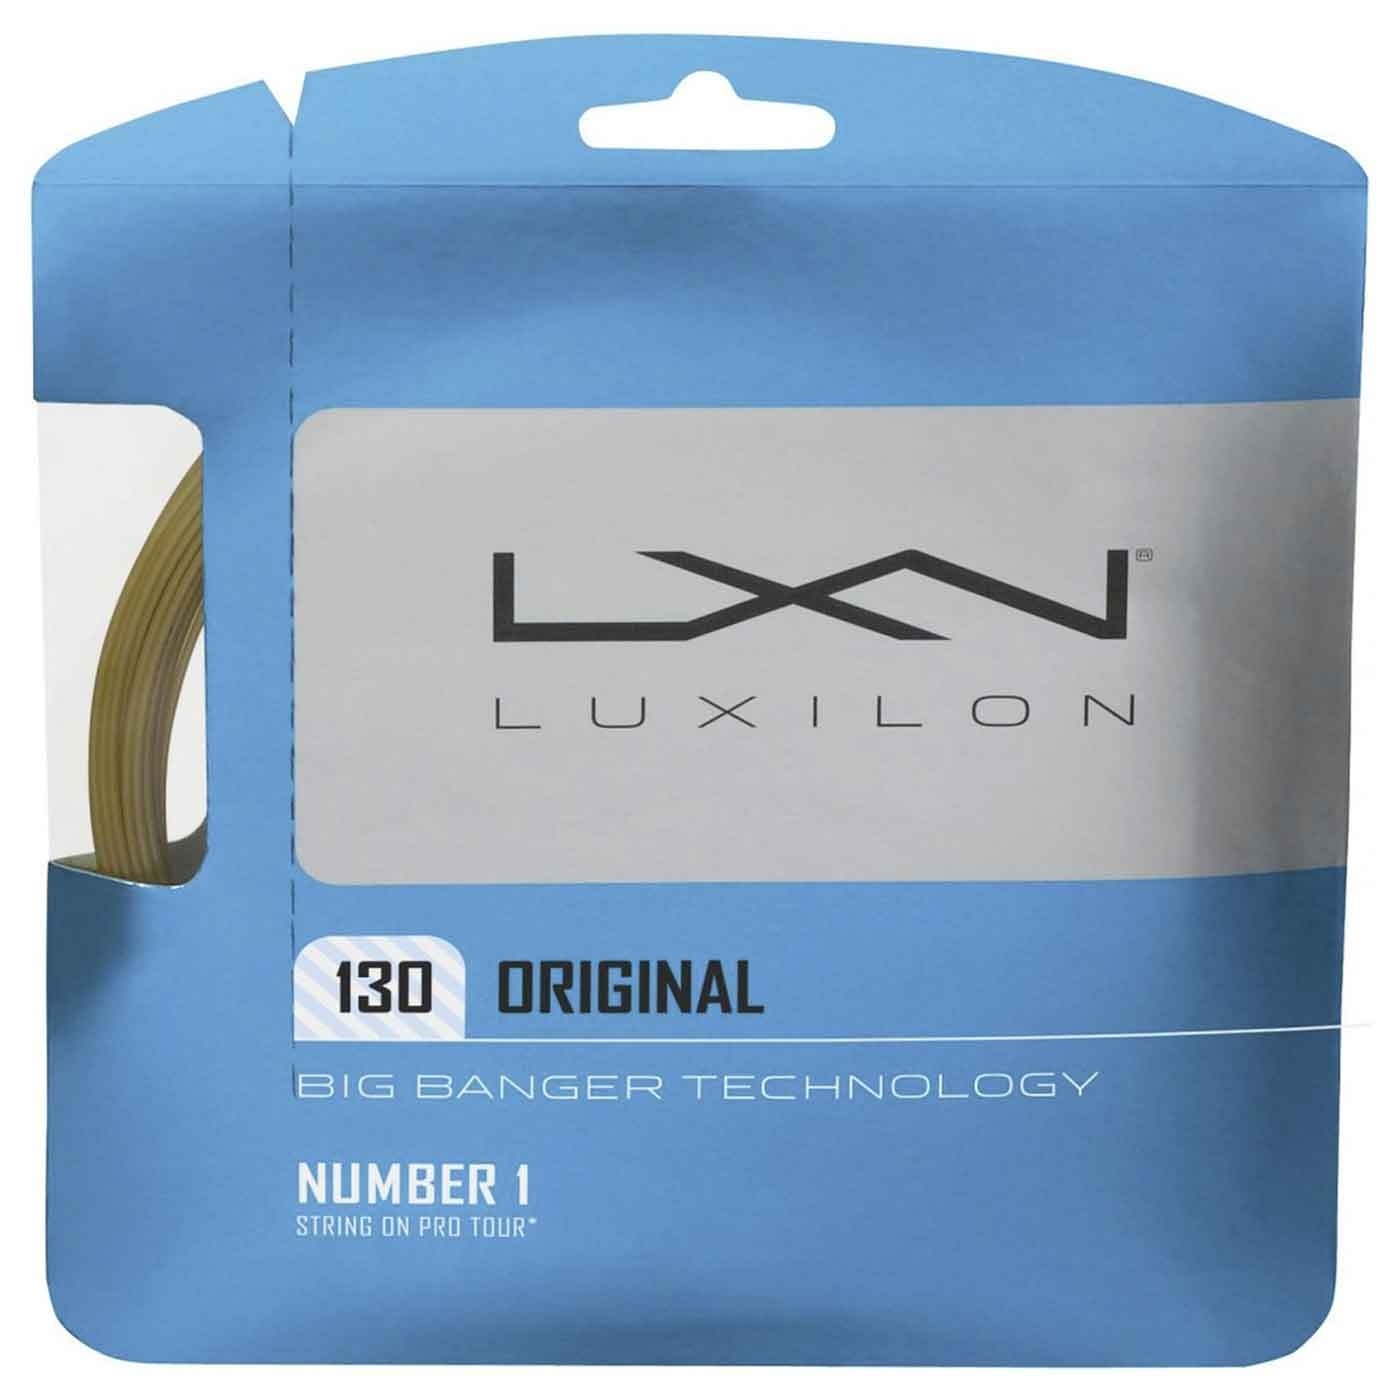 Luxilon Original 1,30